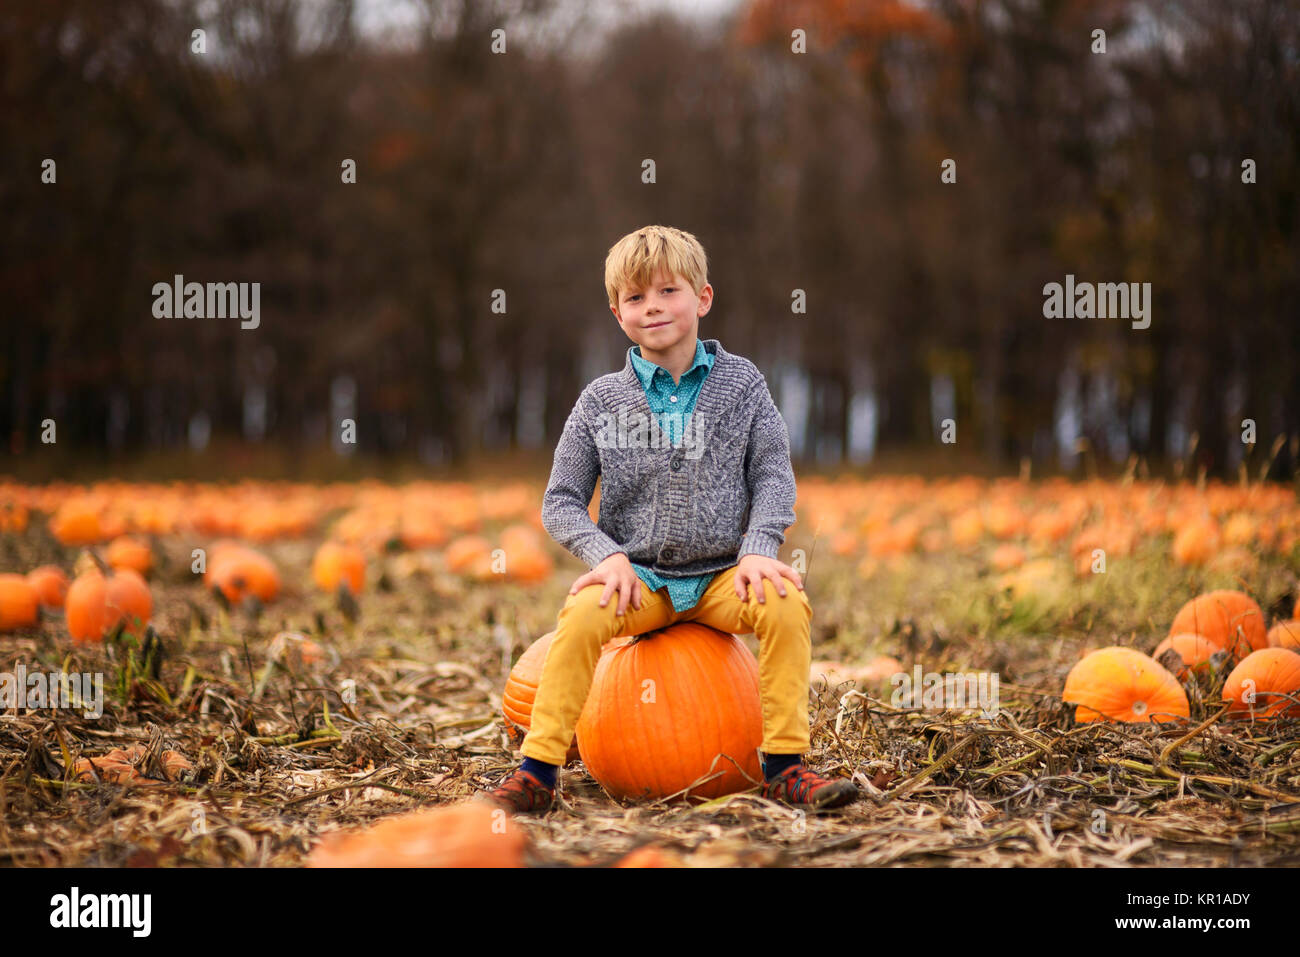 Boy sitting on a pumpkin in a pumpkin patch Stock Photo